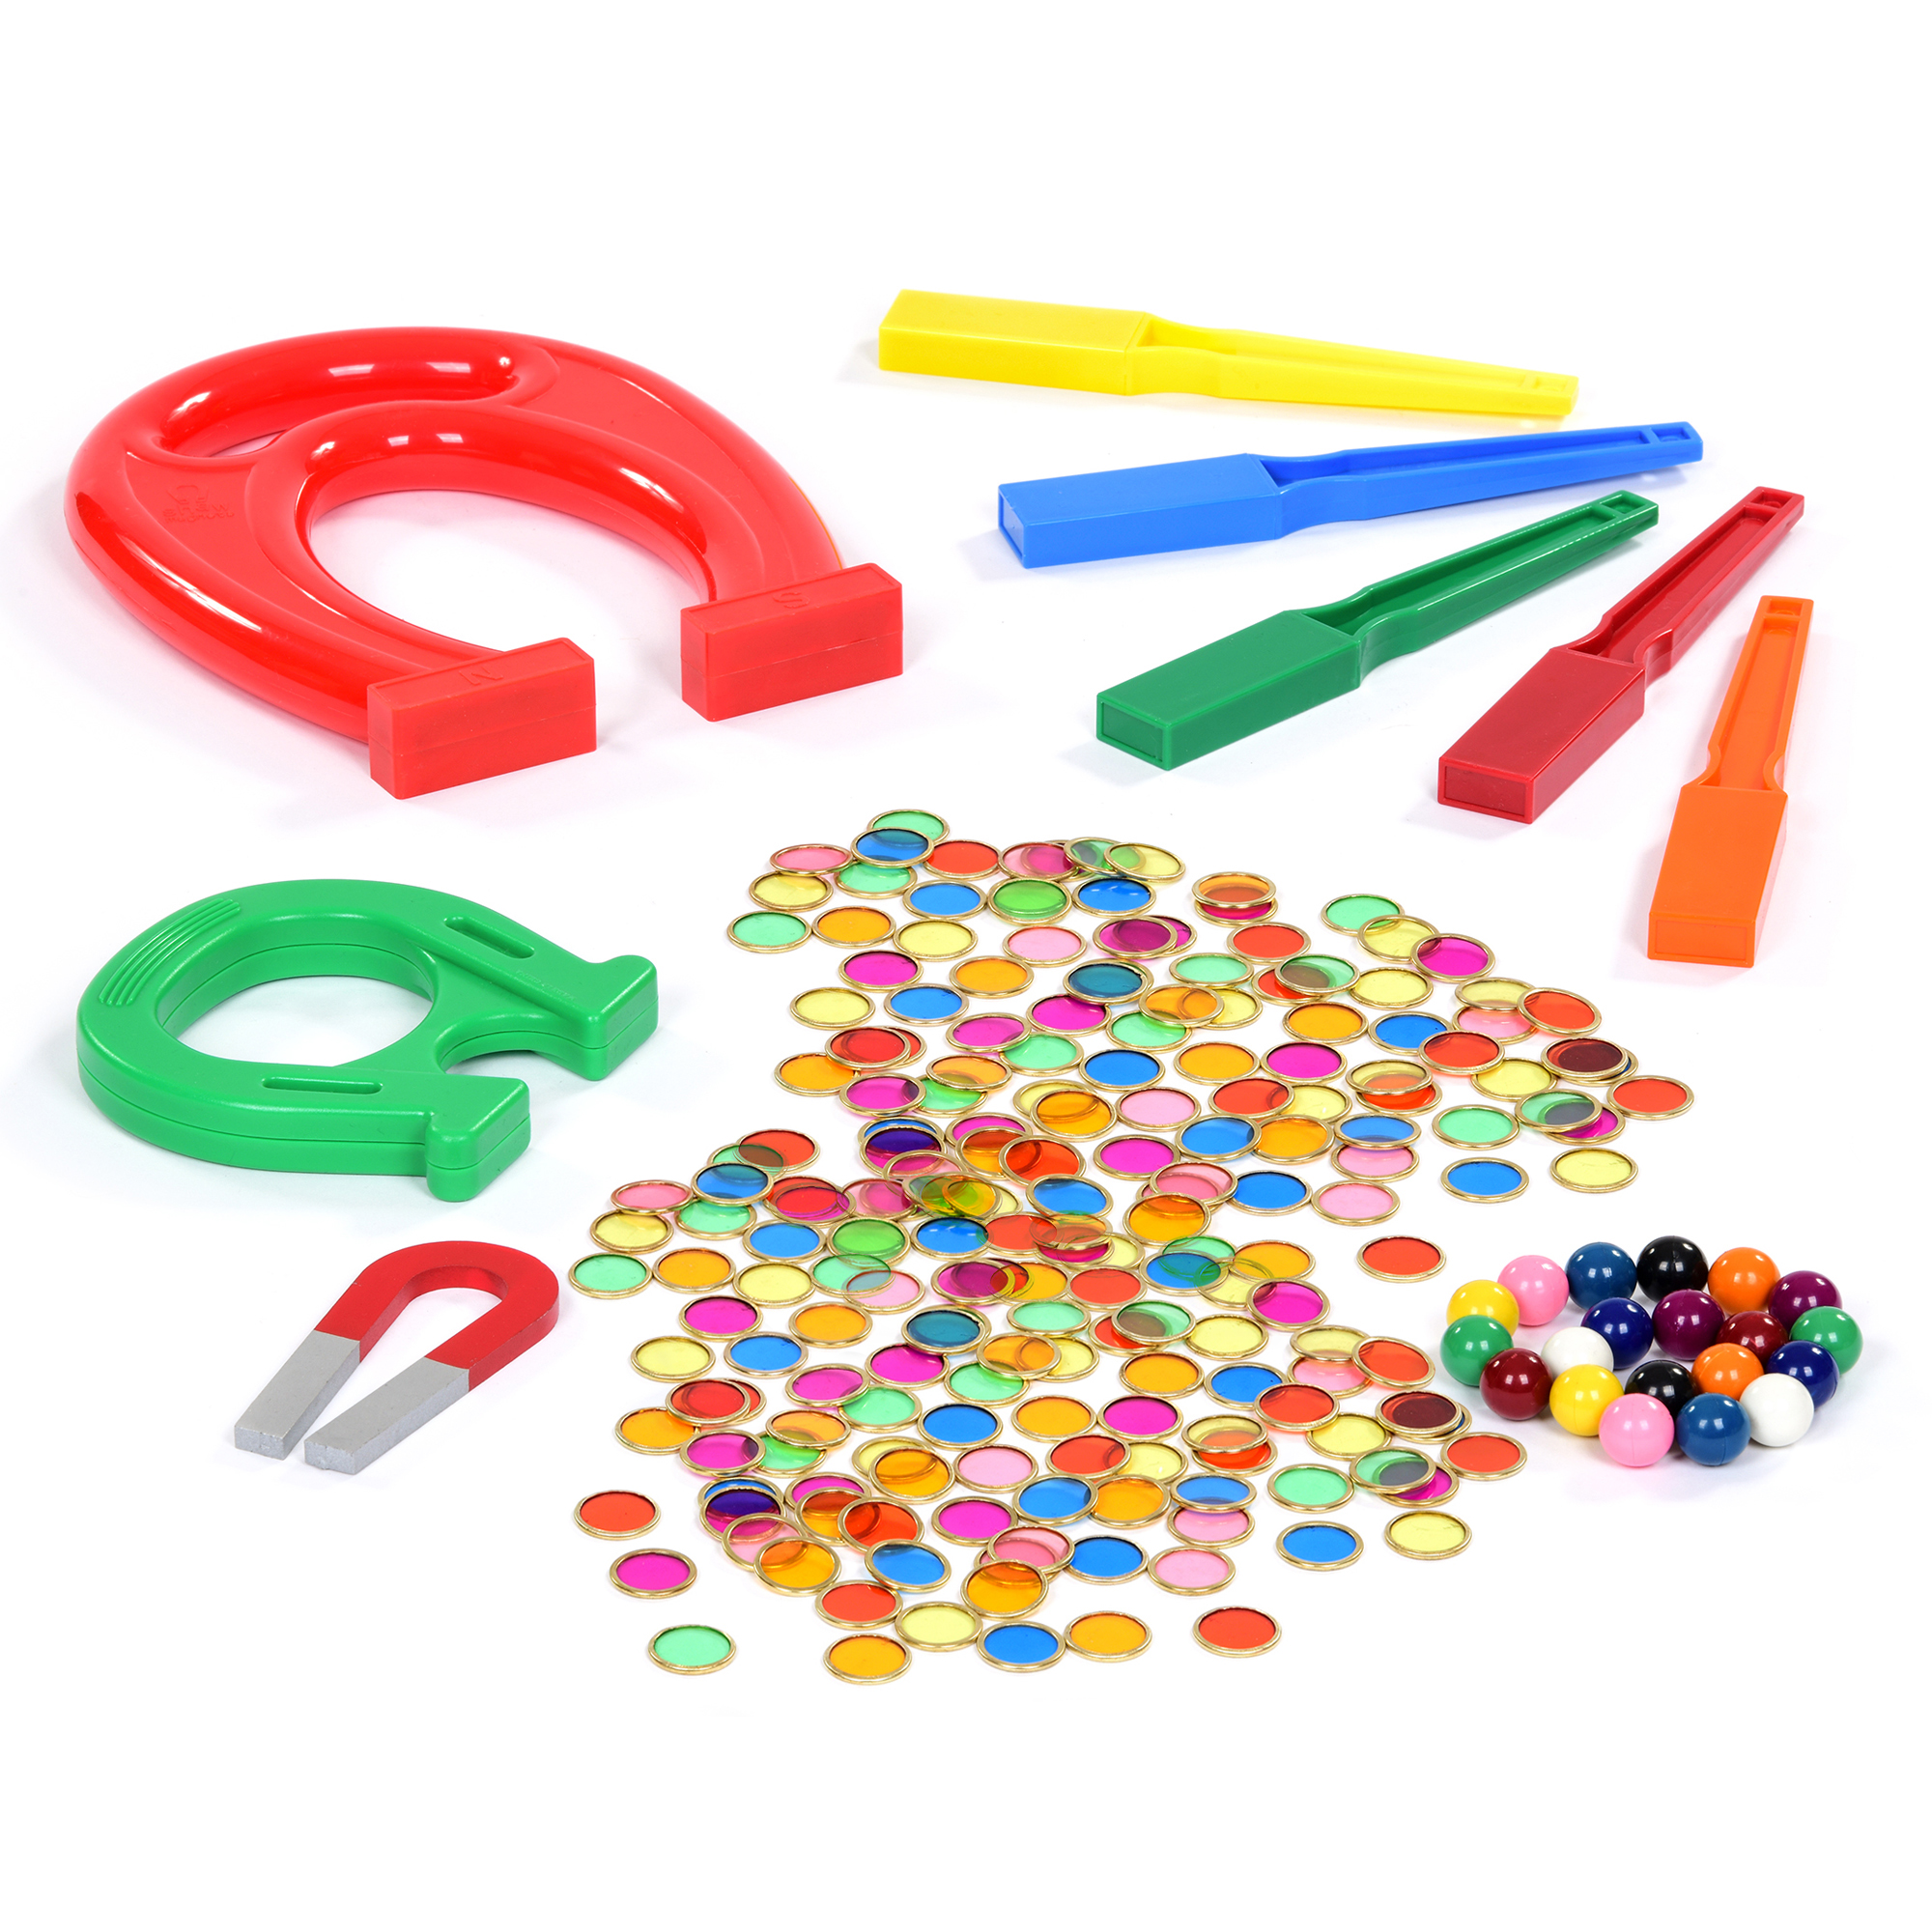 children's magnets set